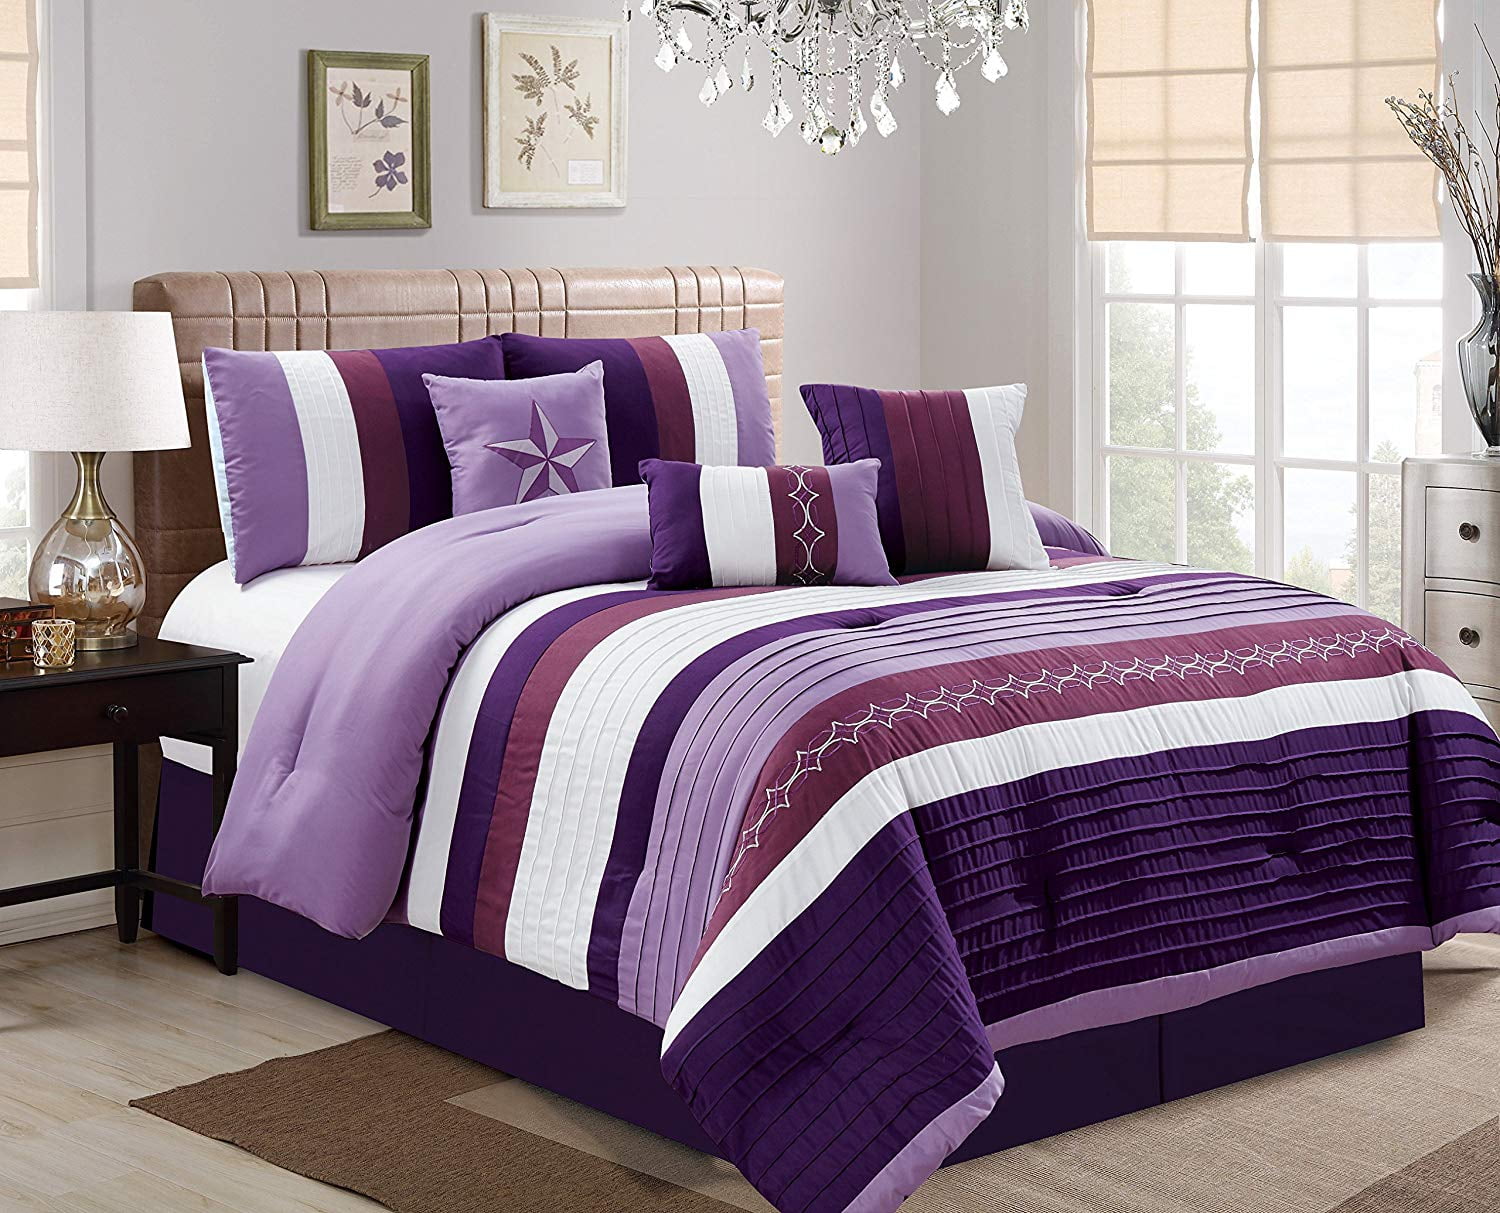 HGMart Bedding Comforter Set Bed In A Bag 7 Piece Luxury 